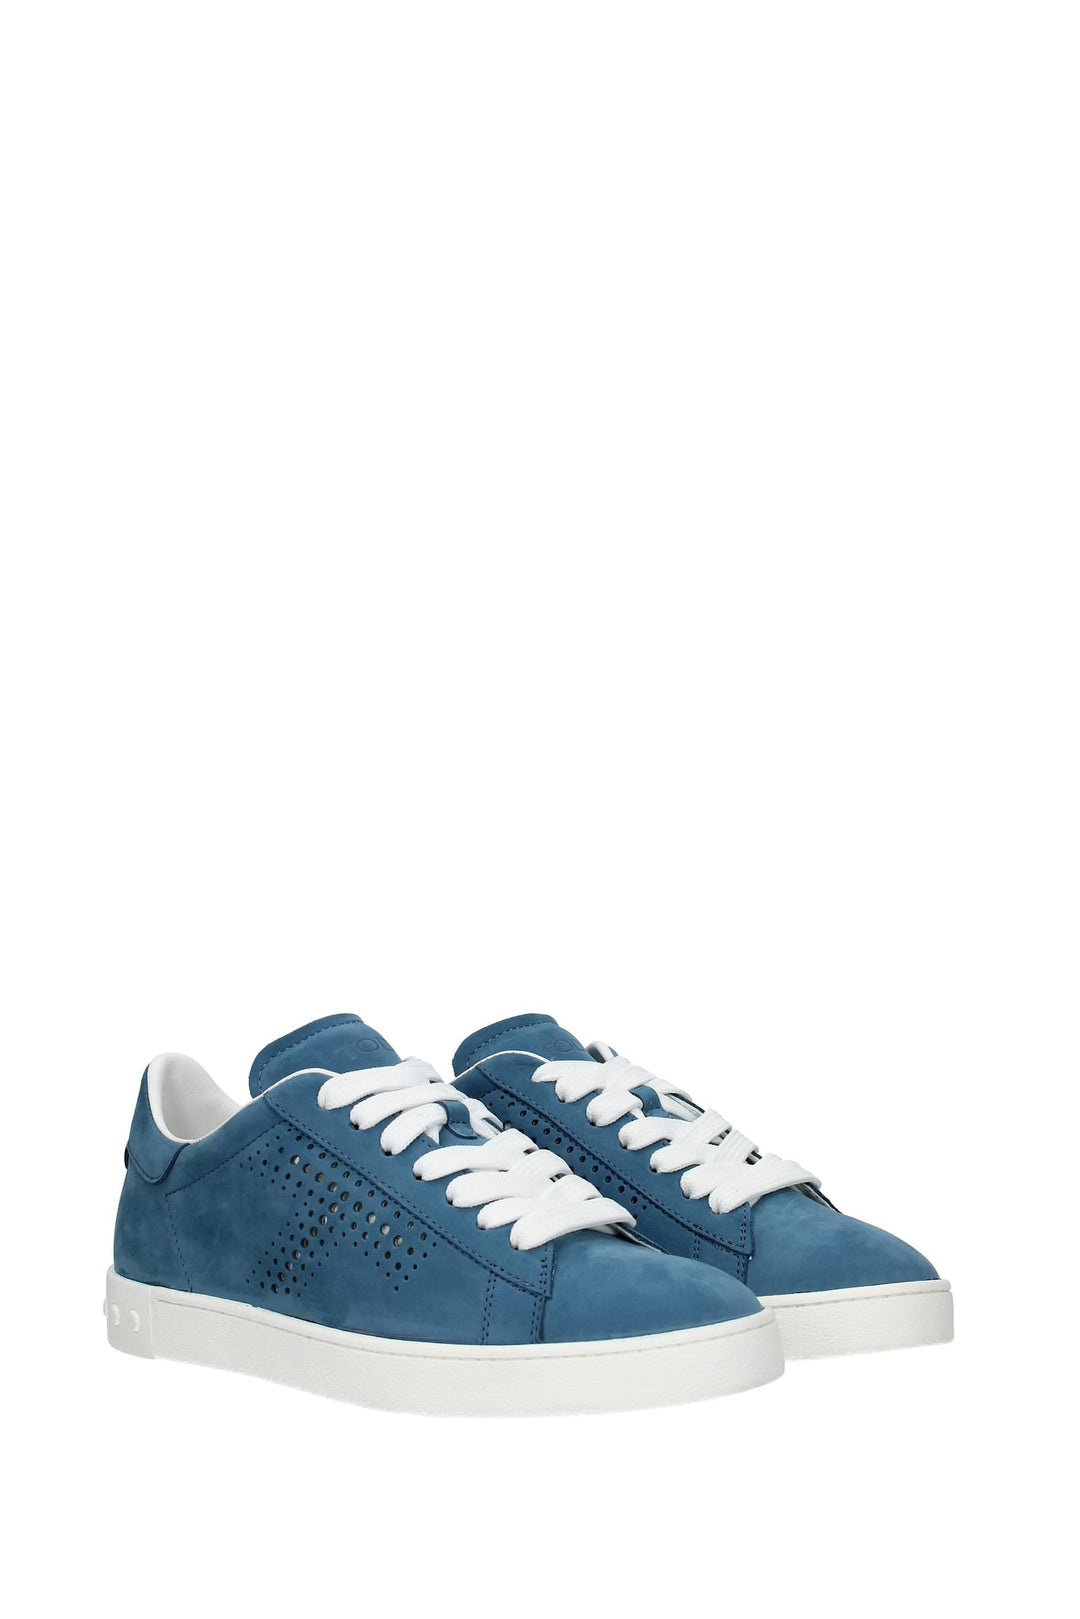 Sneakers Camoscio Blu - Tod's - Donna